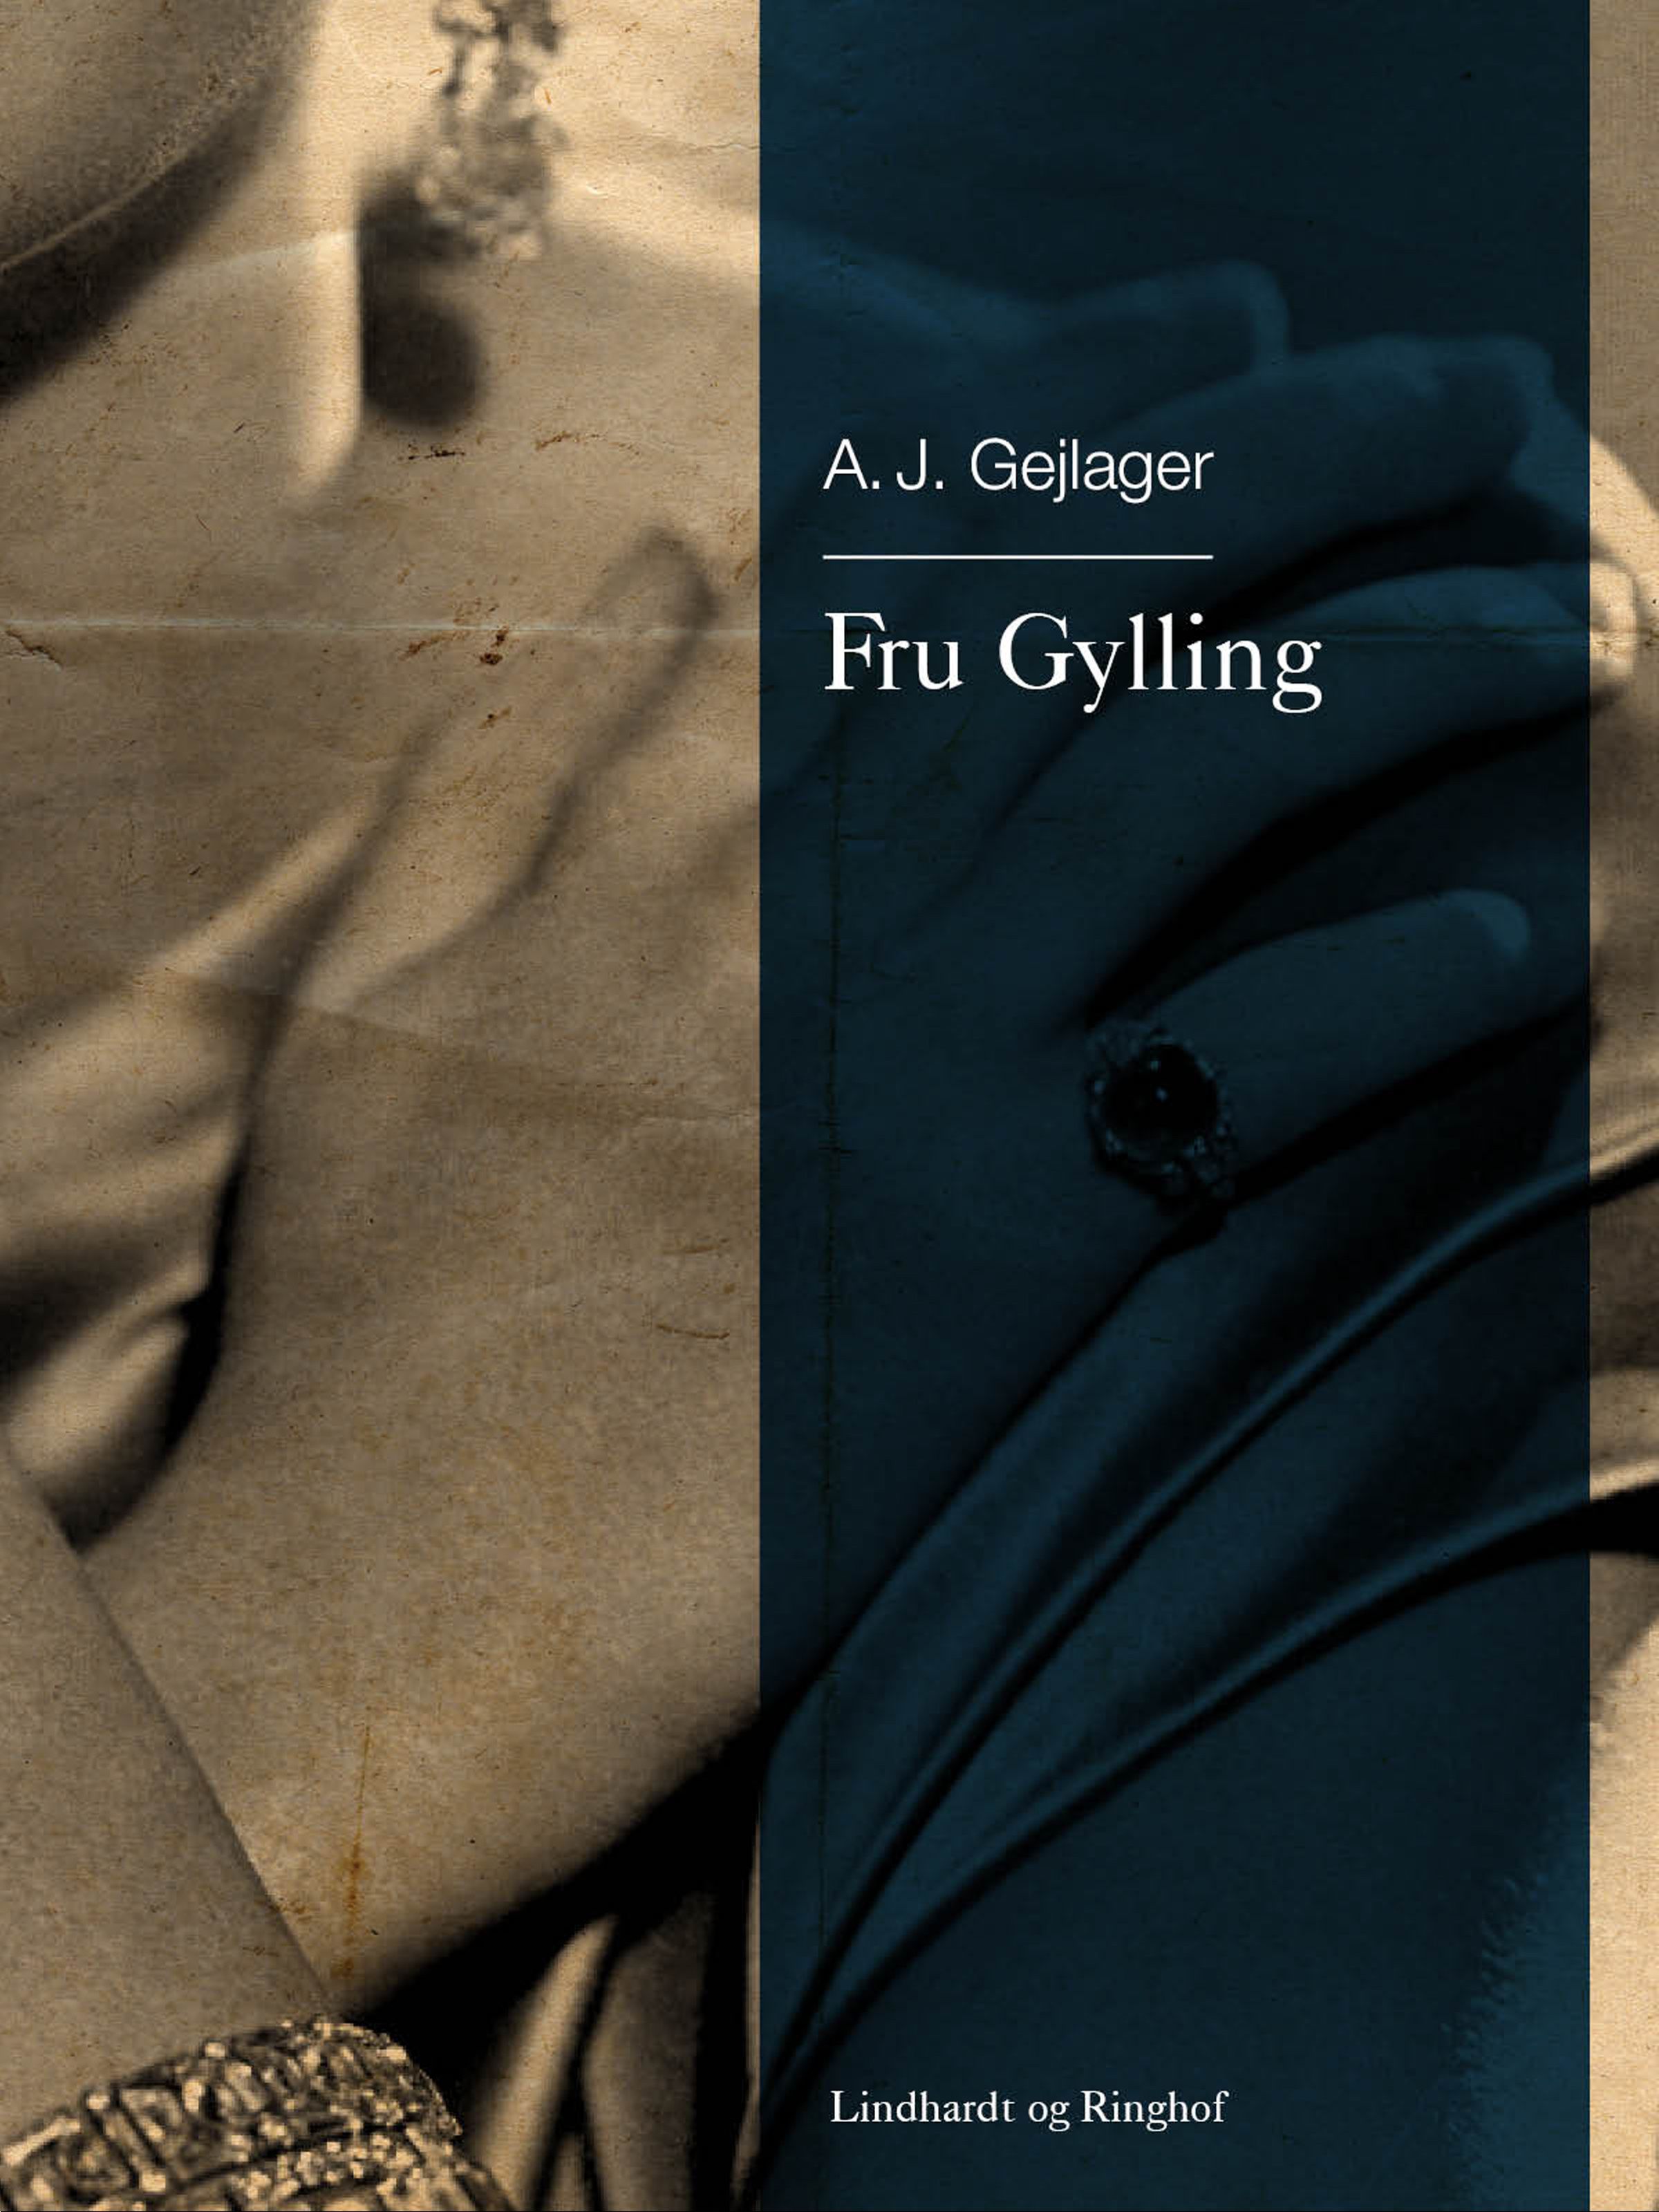 Fru Gylling, ljudbok av A.J Gejlager